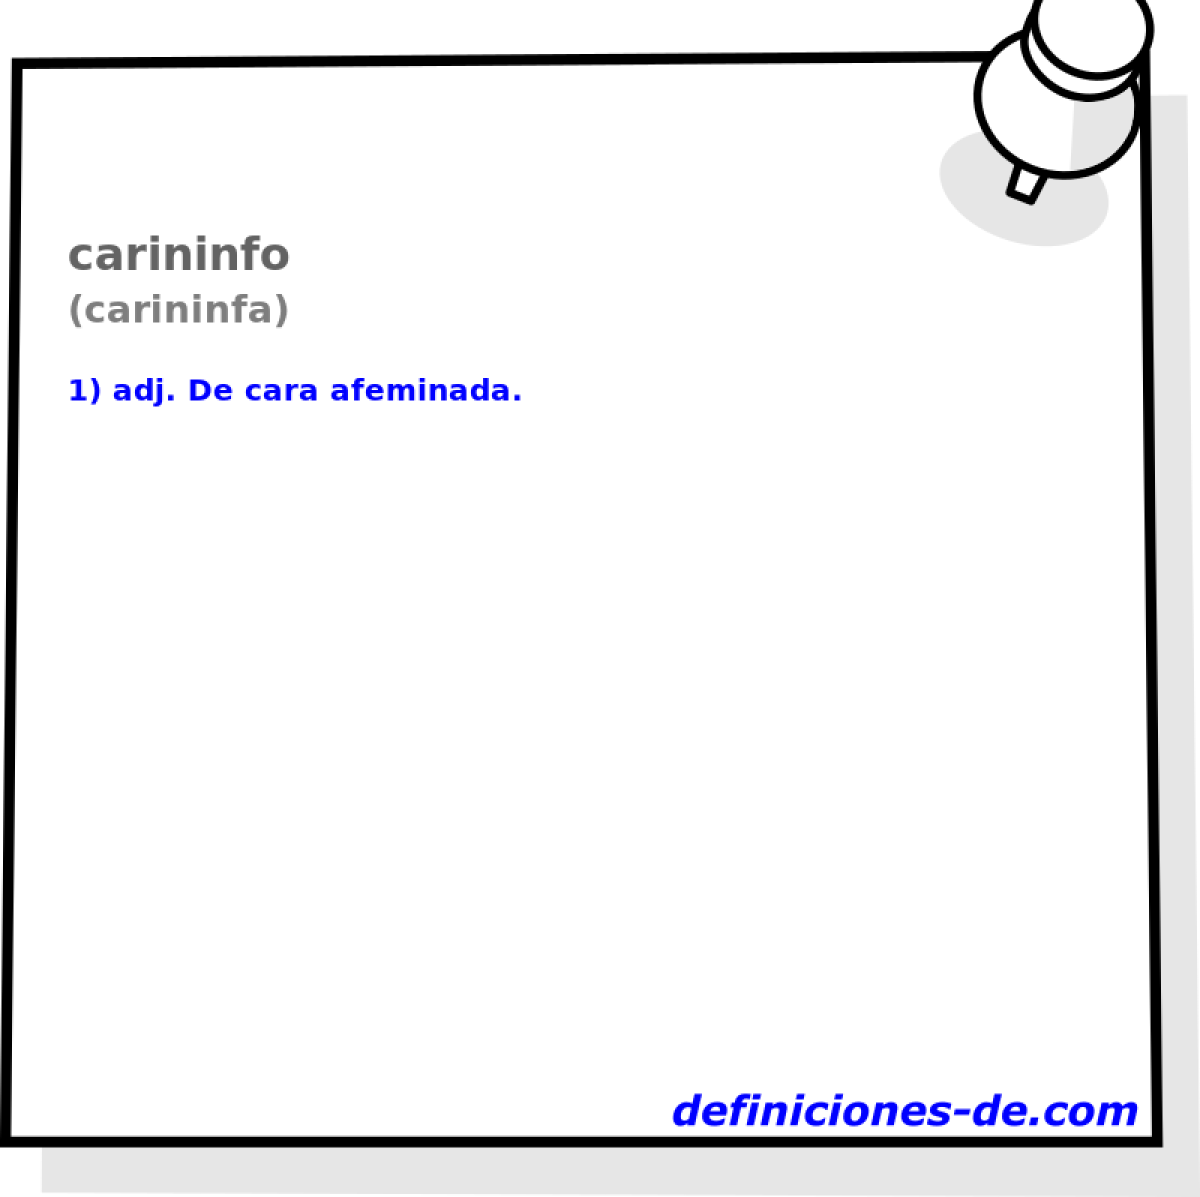 carininfo (carininfa)